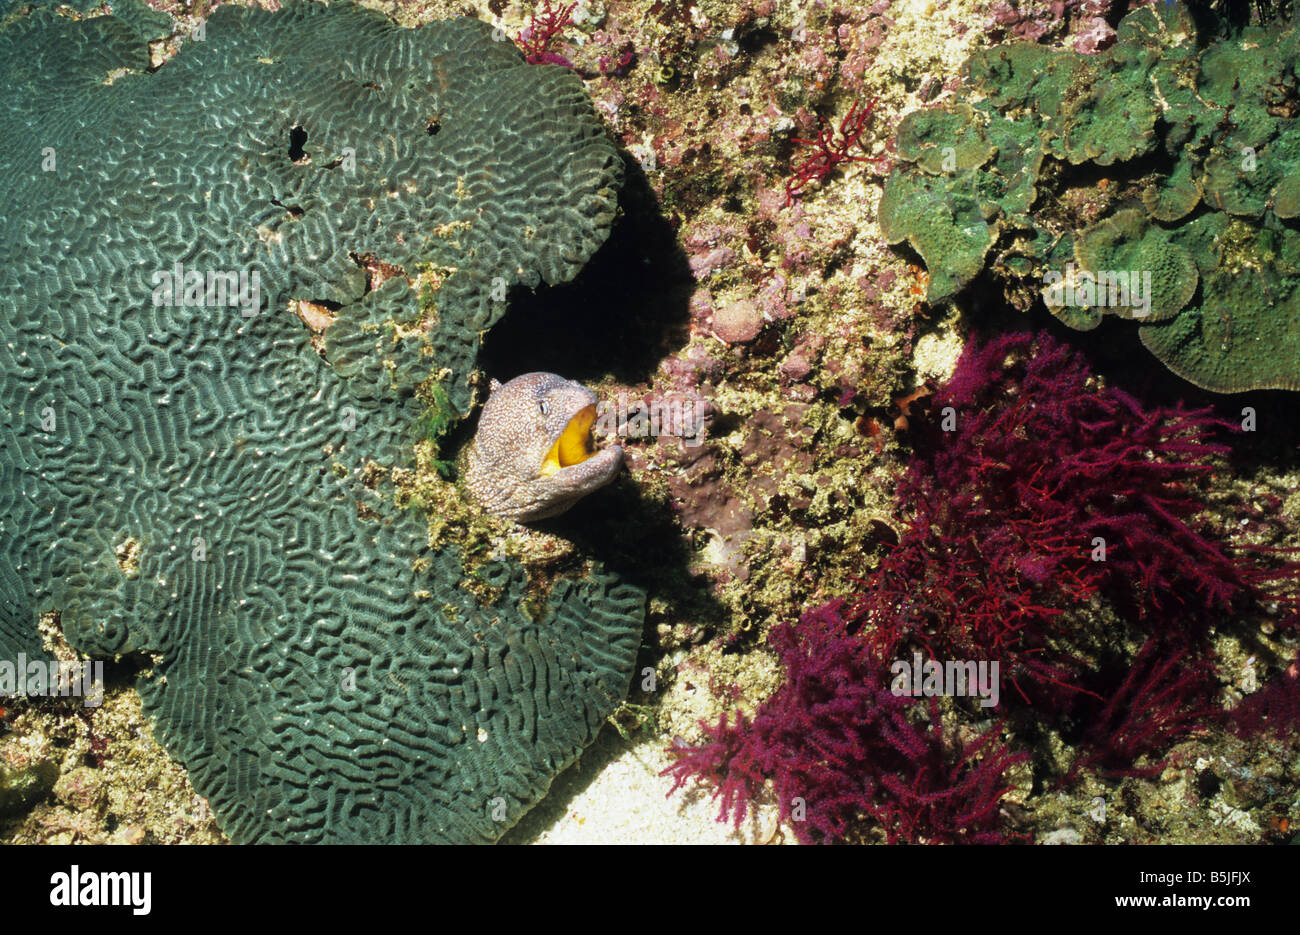 Yellow mouth Moray Eel, (Gymnothorax Nudivomer) beneath a brain coral. Off Limah Rock. Oman. Marine life of Oman. Stock Photo